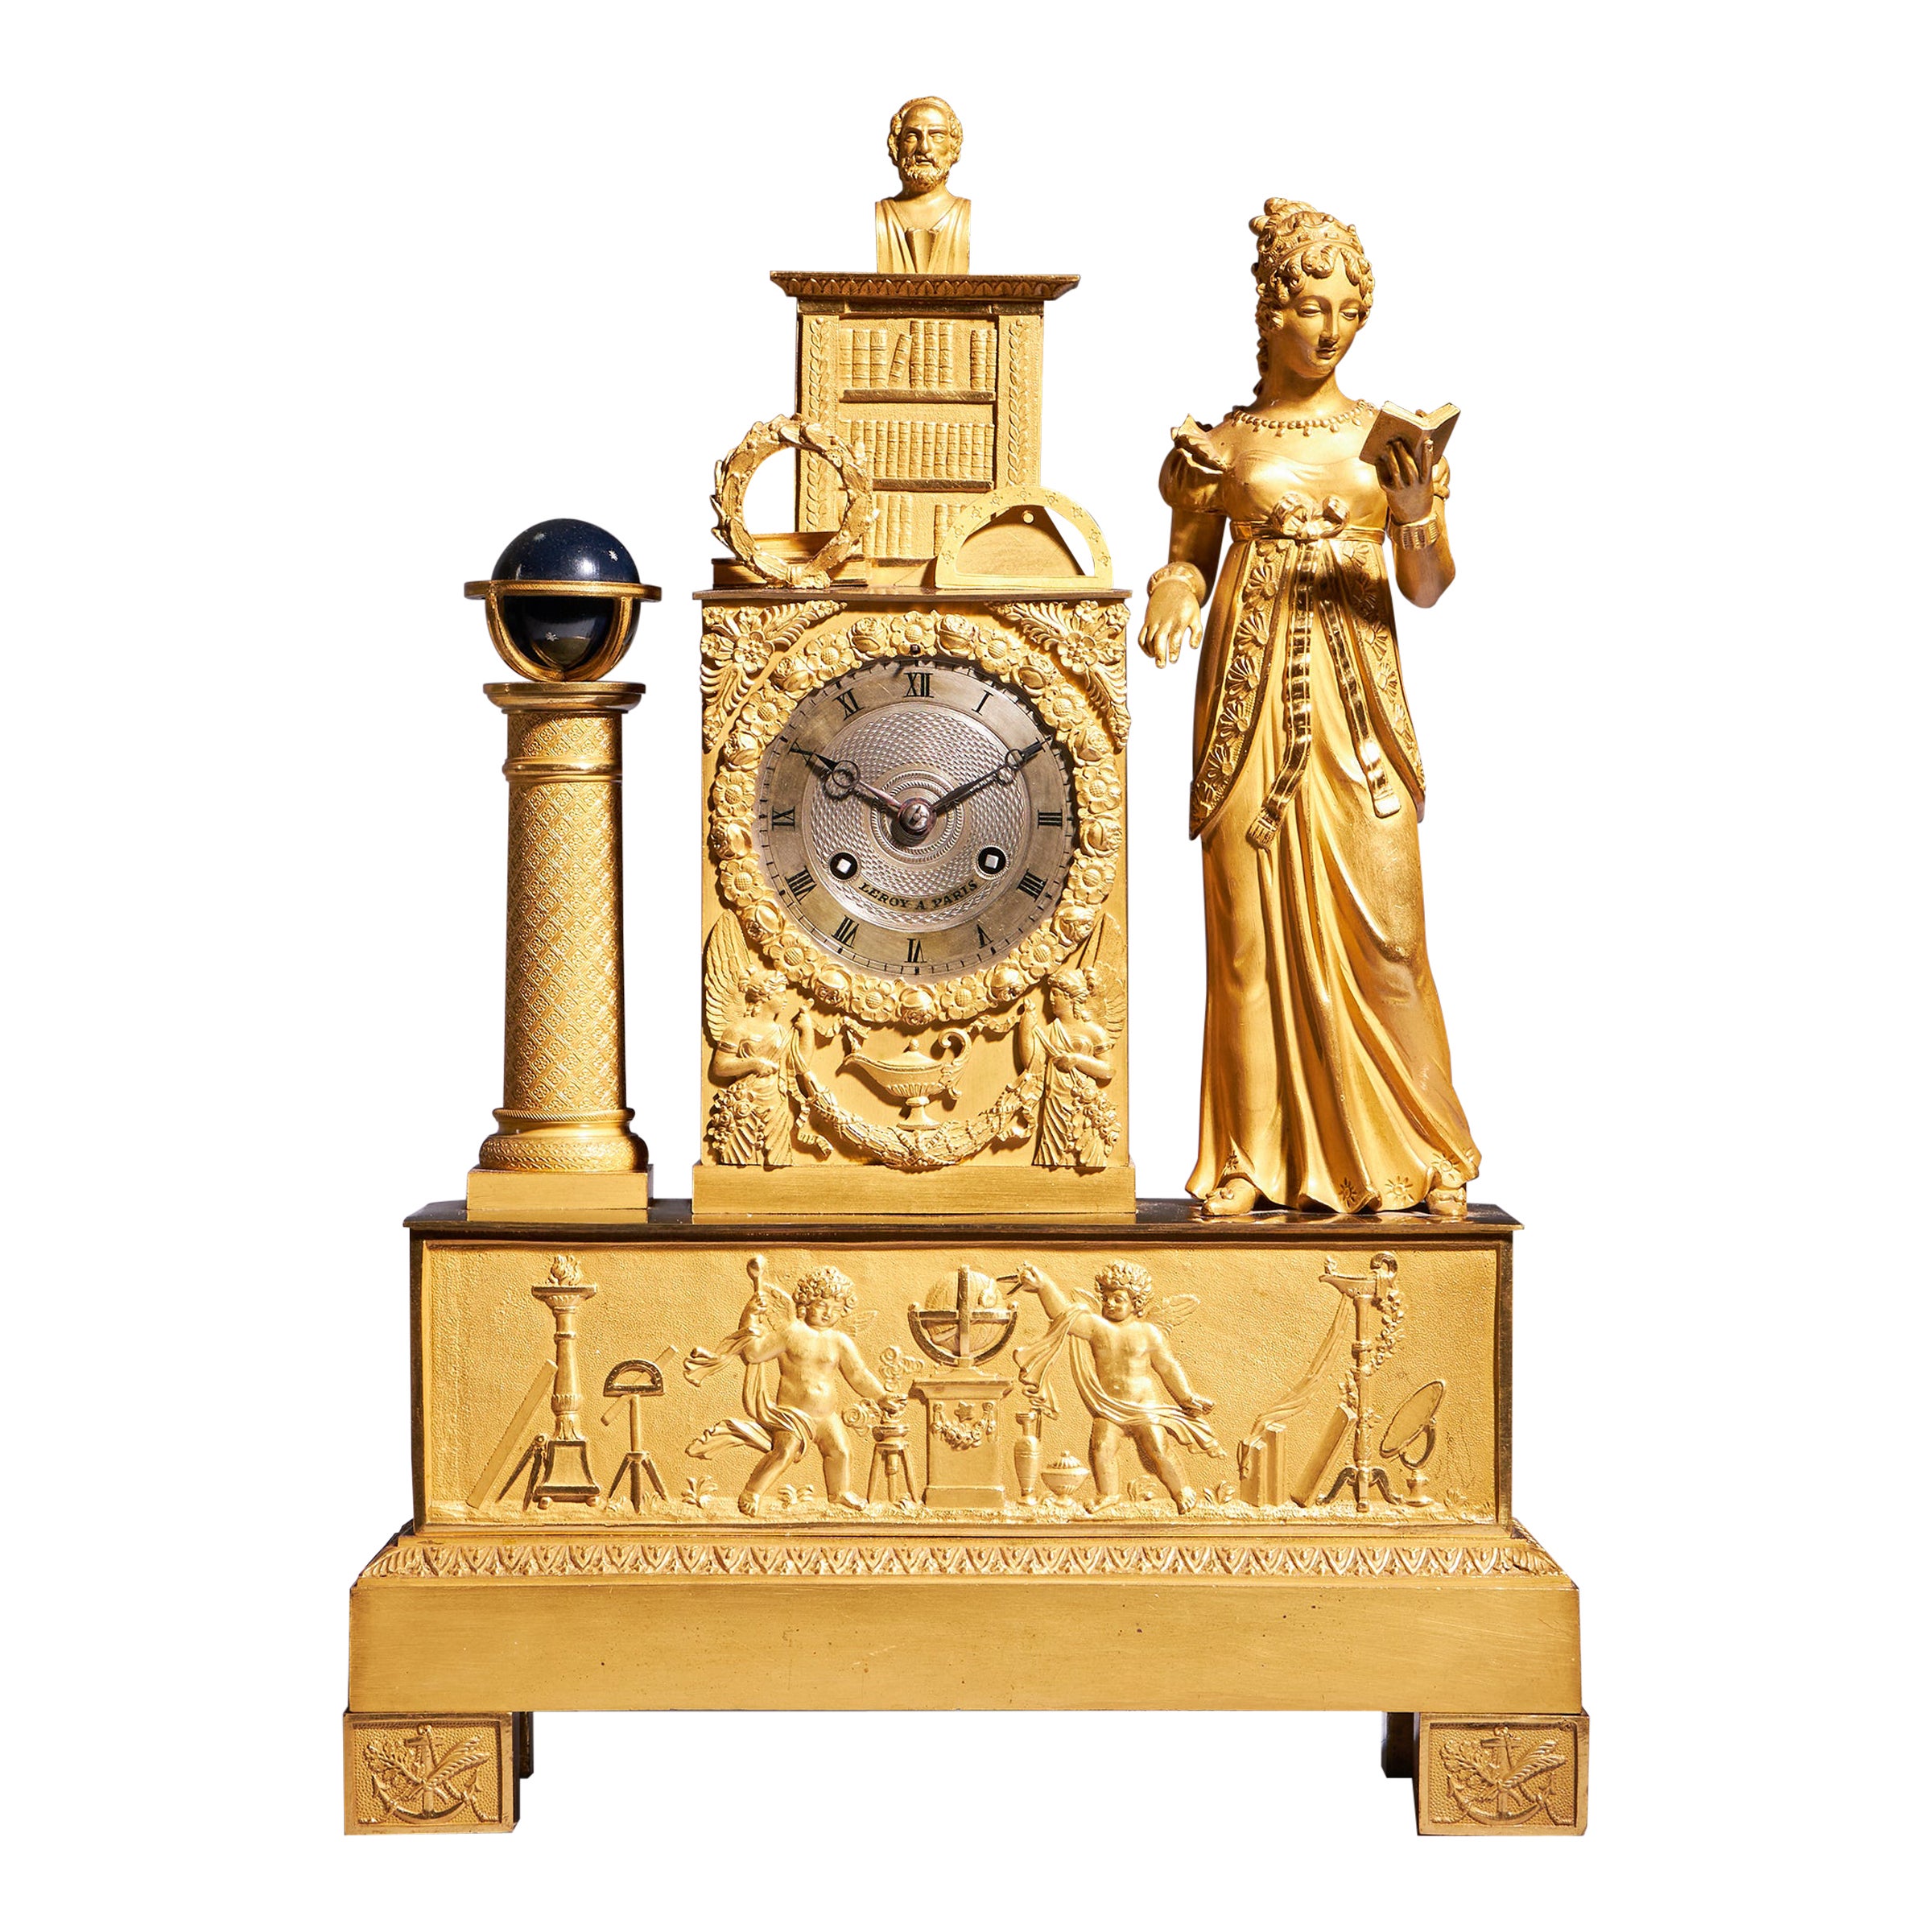 Fine 19th century French ormolu mantel clock (pendule) by Leroy a Paris, c. 1825 For Sale